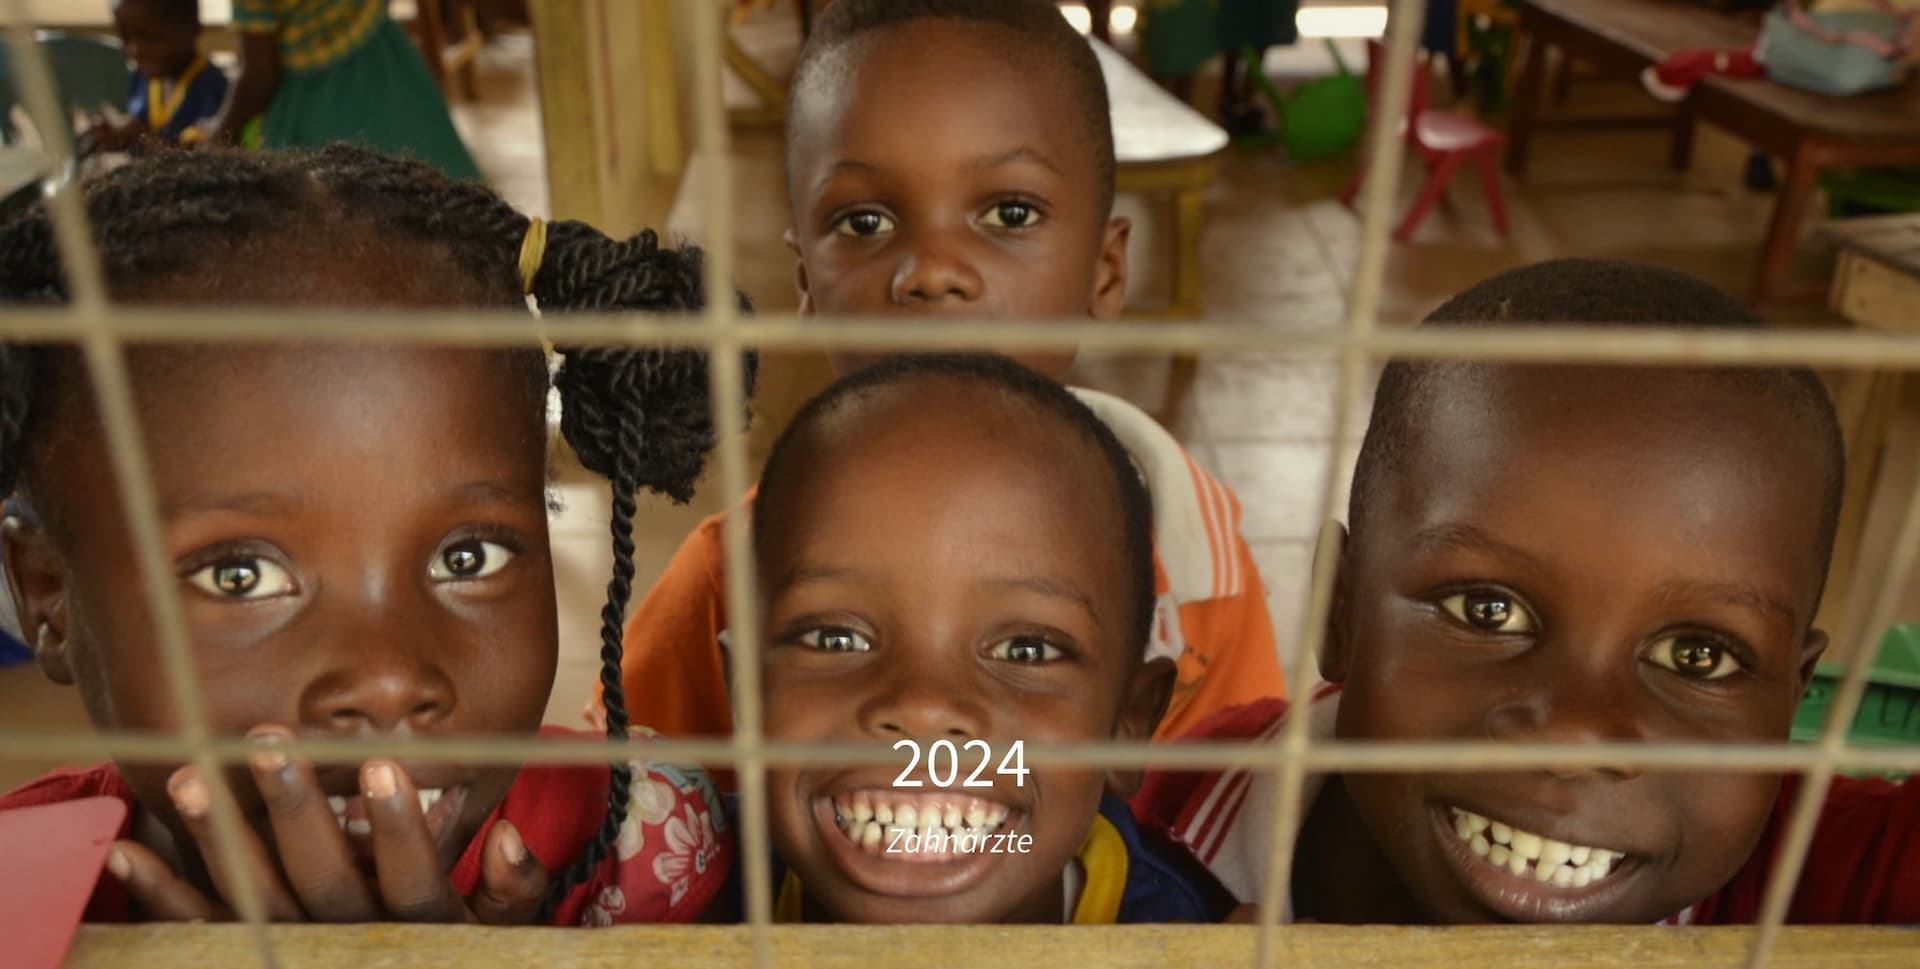 Kinder an unserer Schule, die freudig in die Kamera strahlen. Sunbeam 2024.